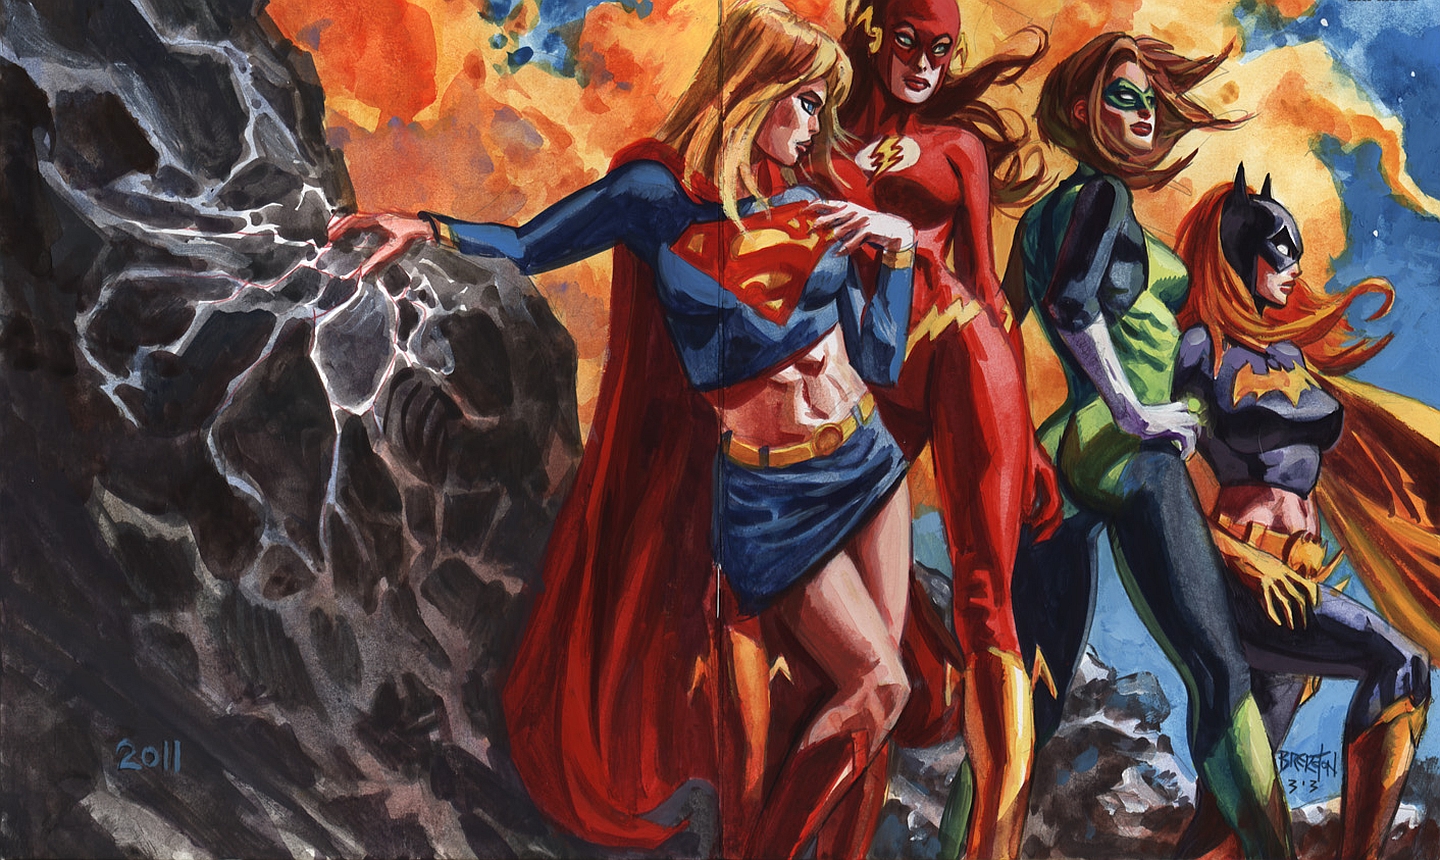 Justice League Puter Wallpaper Desktop Background